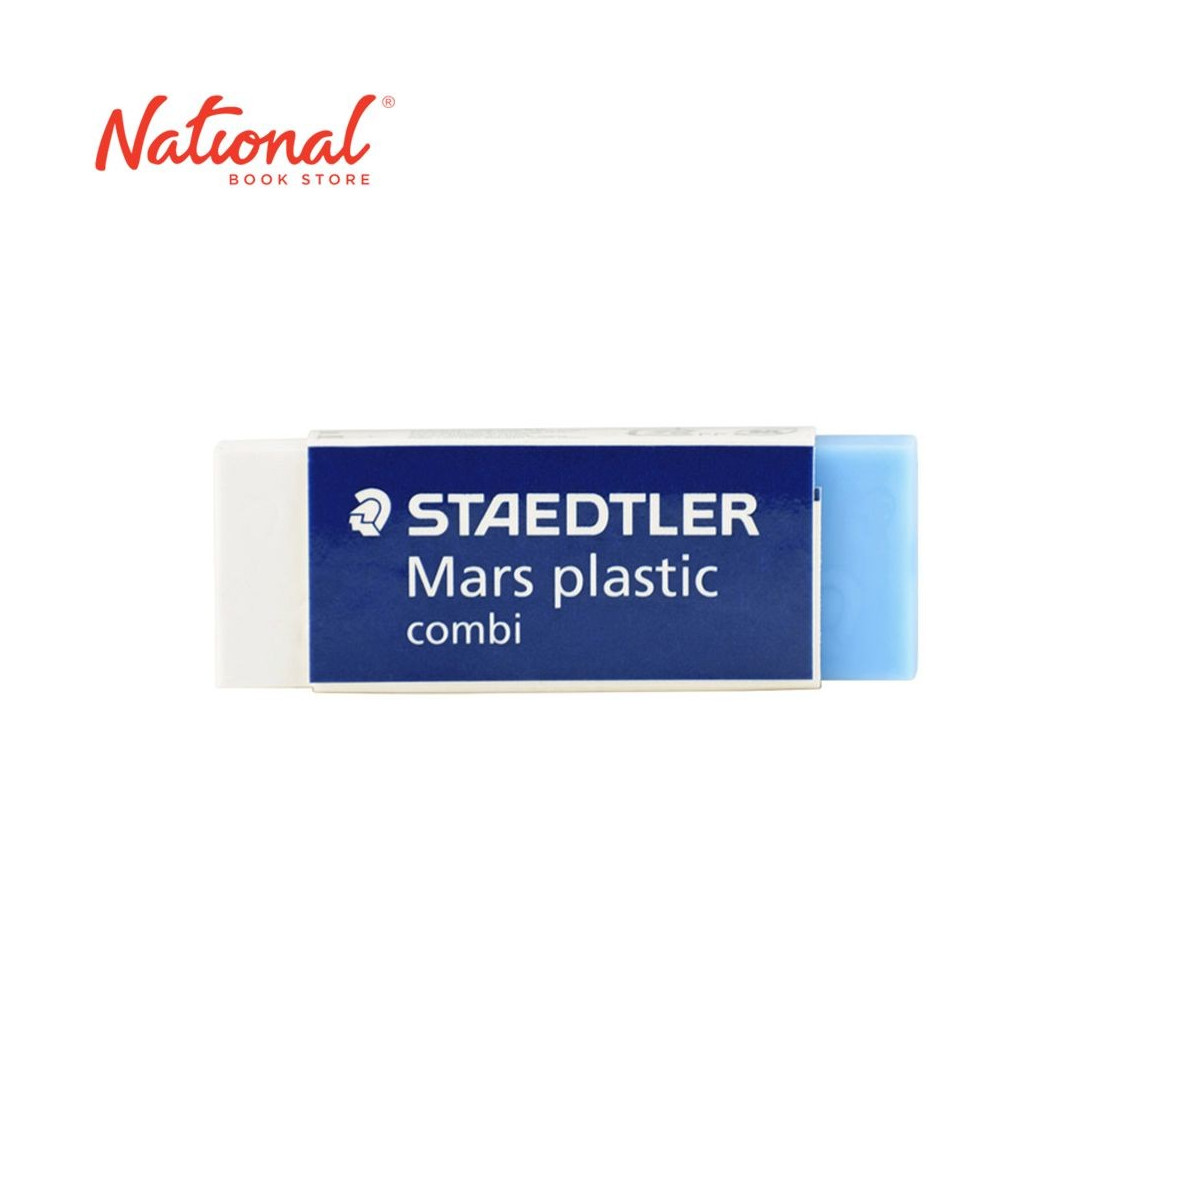 STAEDTLER ERASER 526 508 MARS PLASTIC COMBINATION WHITE AND BLUE